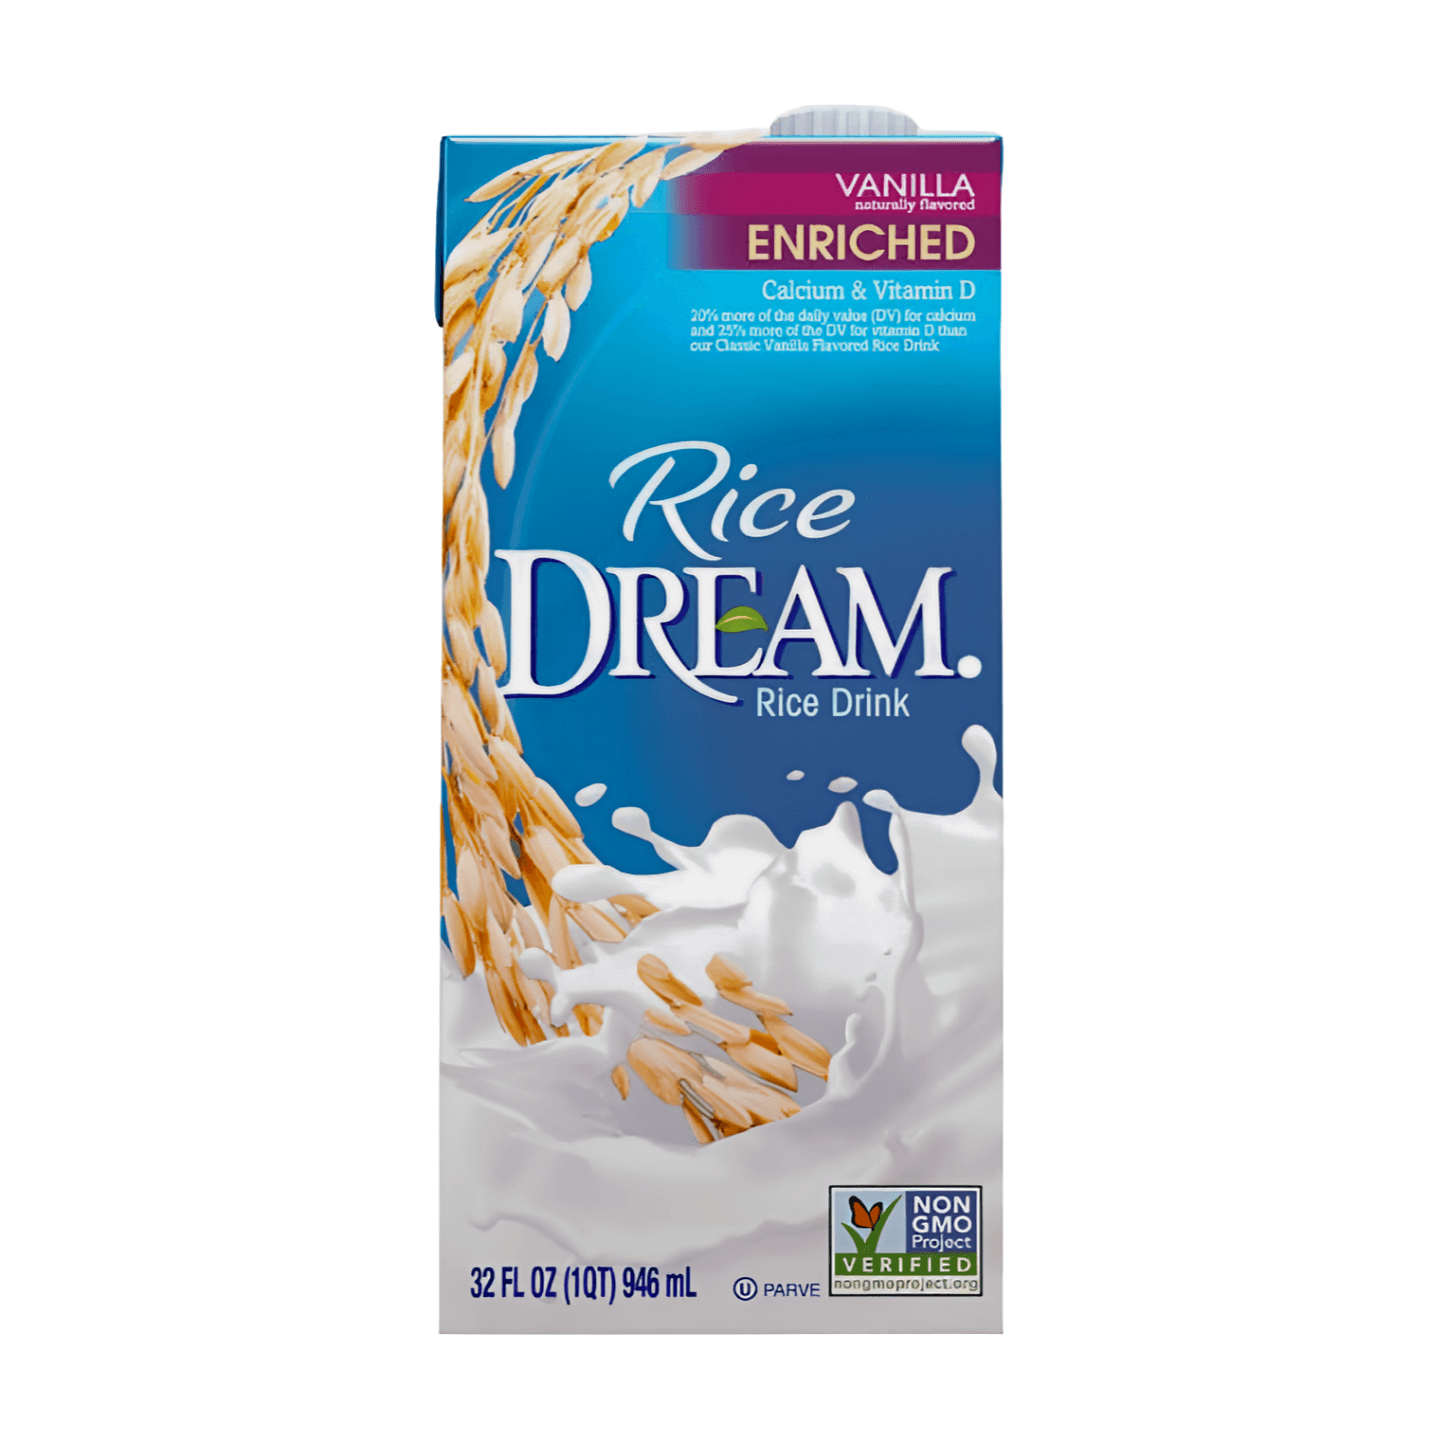 Rice Dream™ Enriched Vanilla Rice Drink